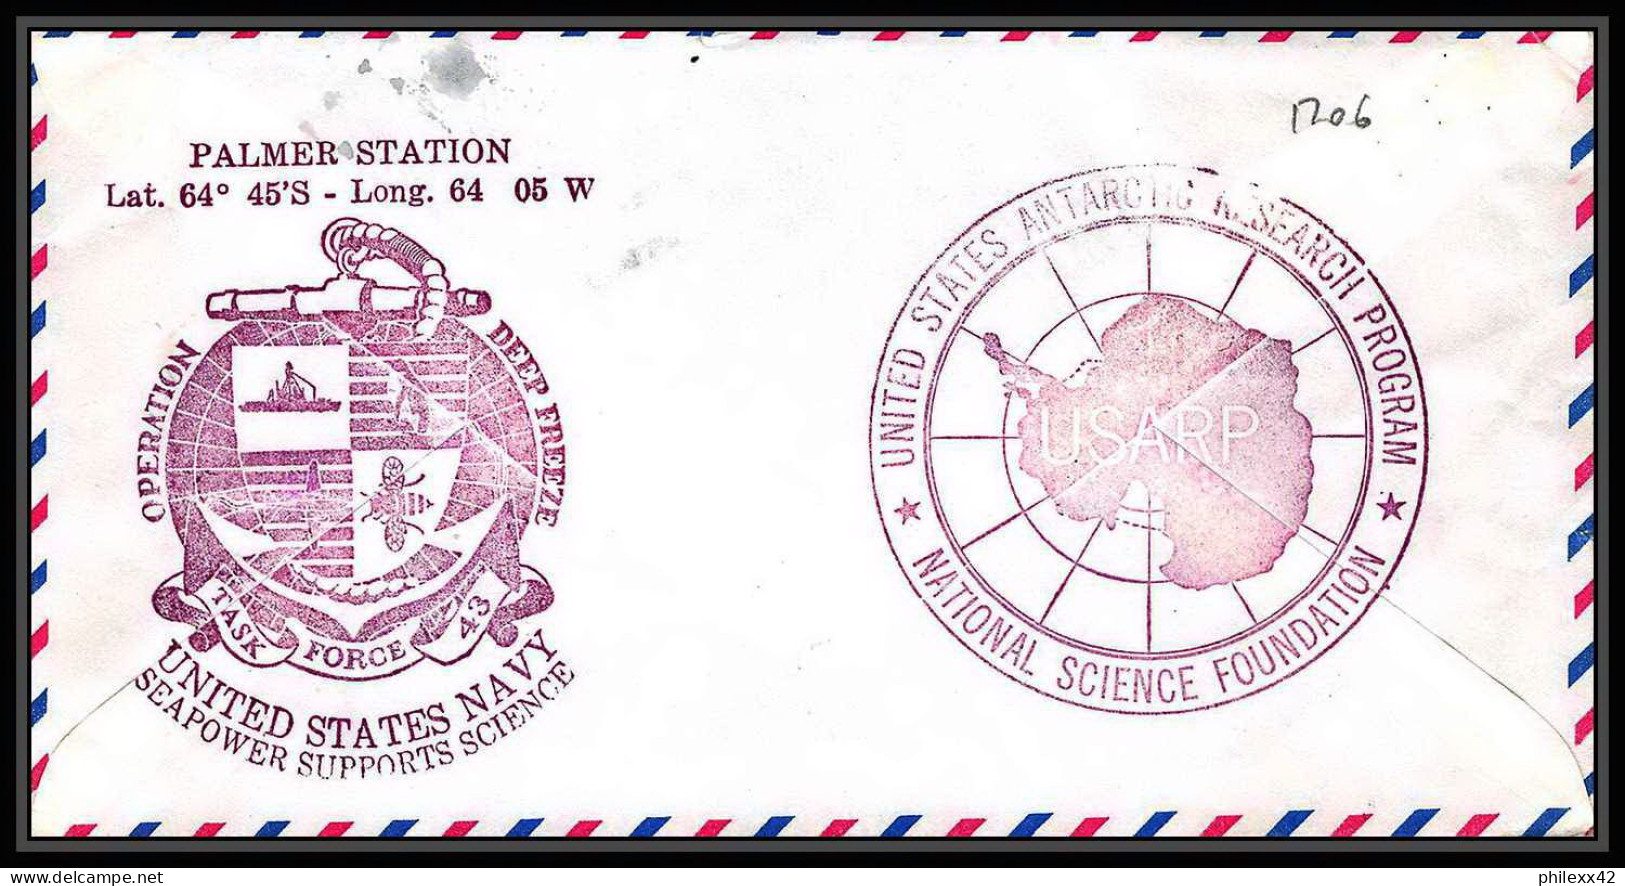 1206 Usa Enveloppe Lettre Cover Ship Hero 1972 Antarctic - Expéditions Antarctiques